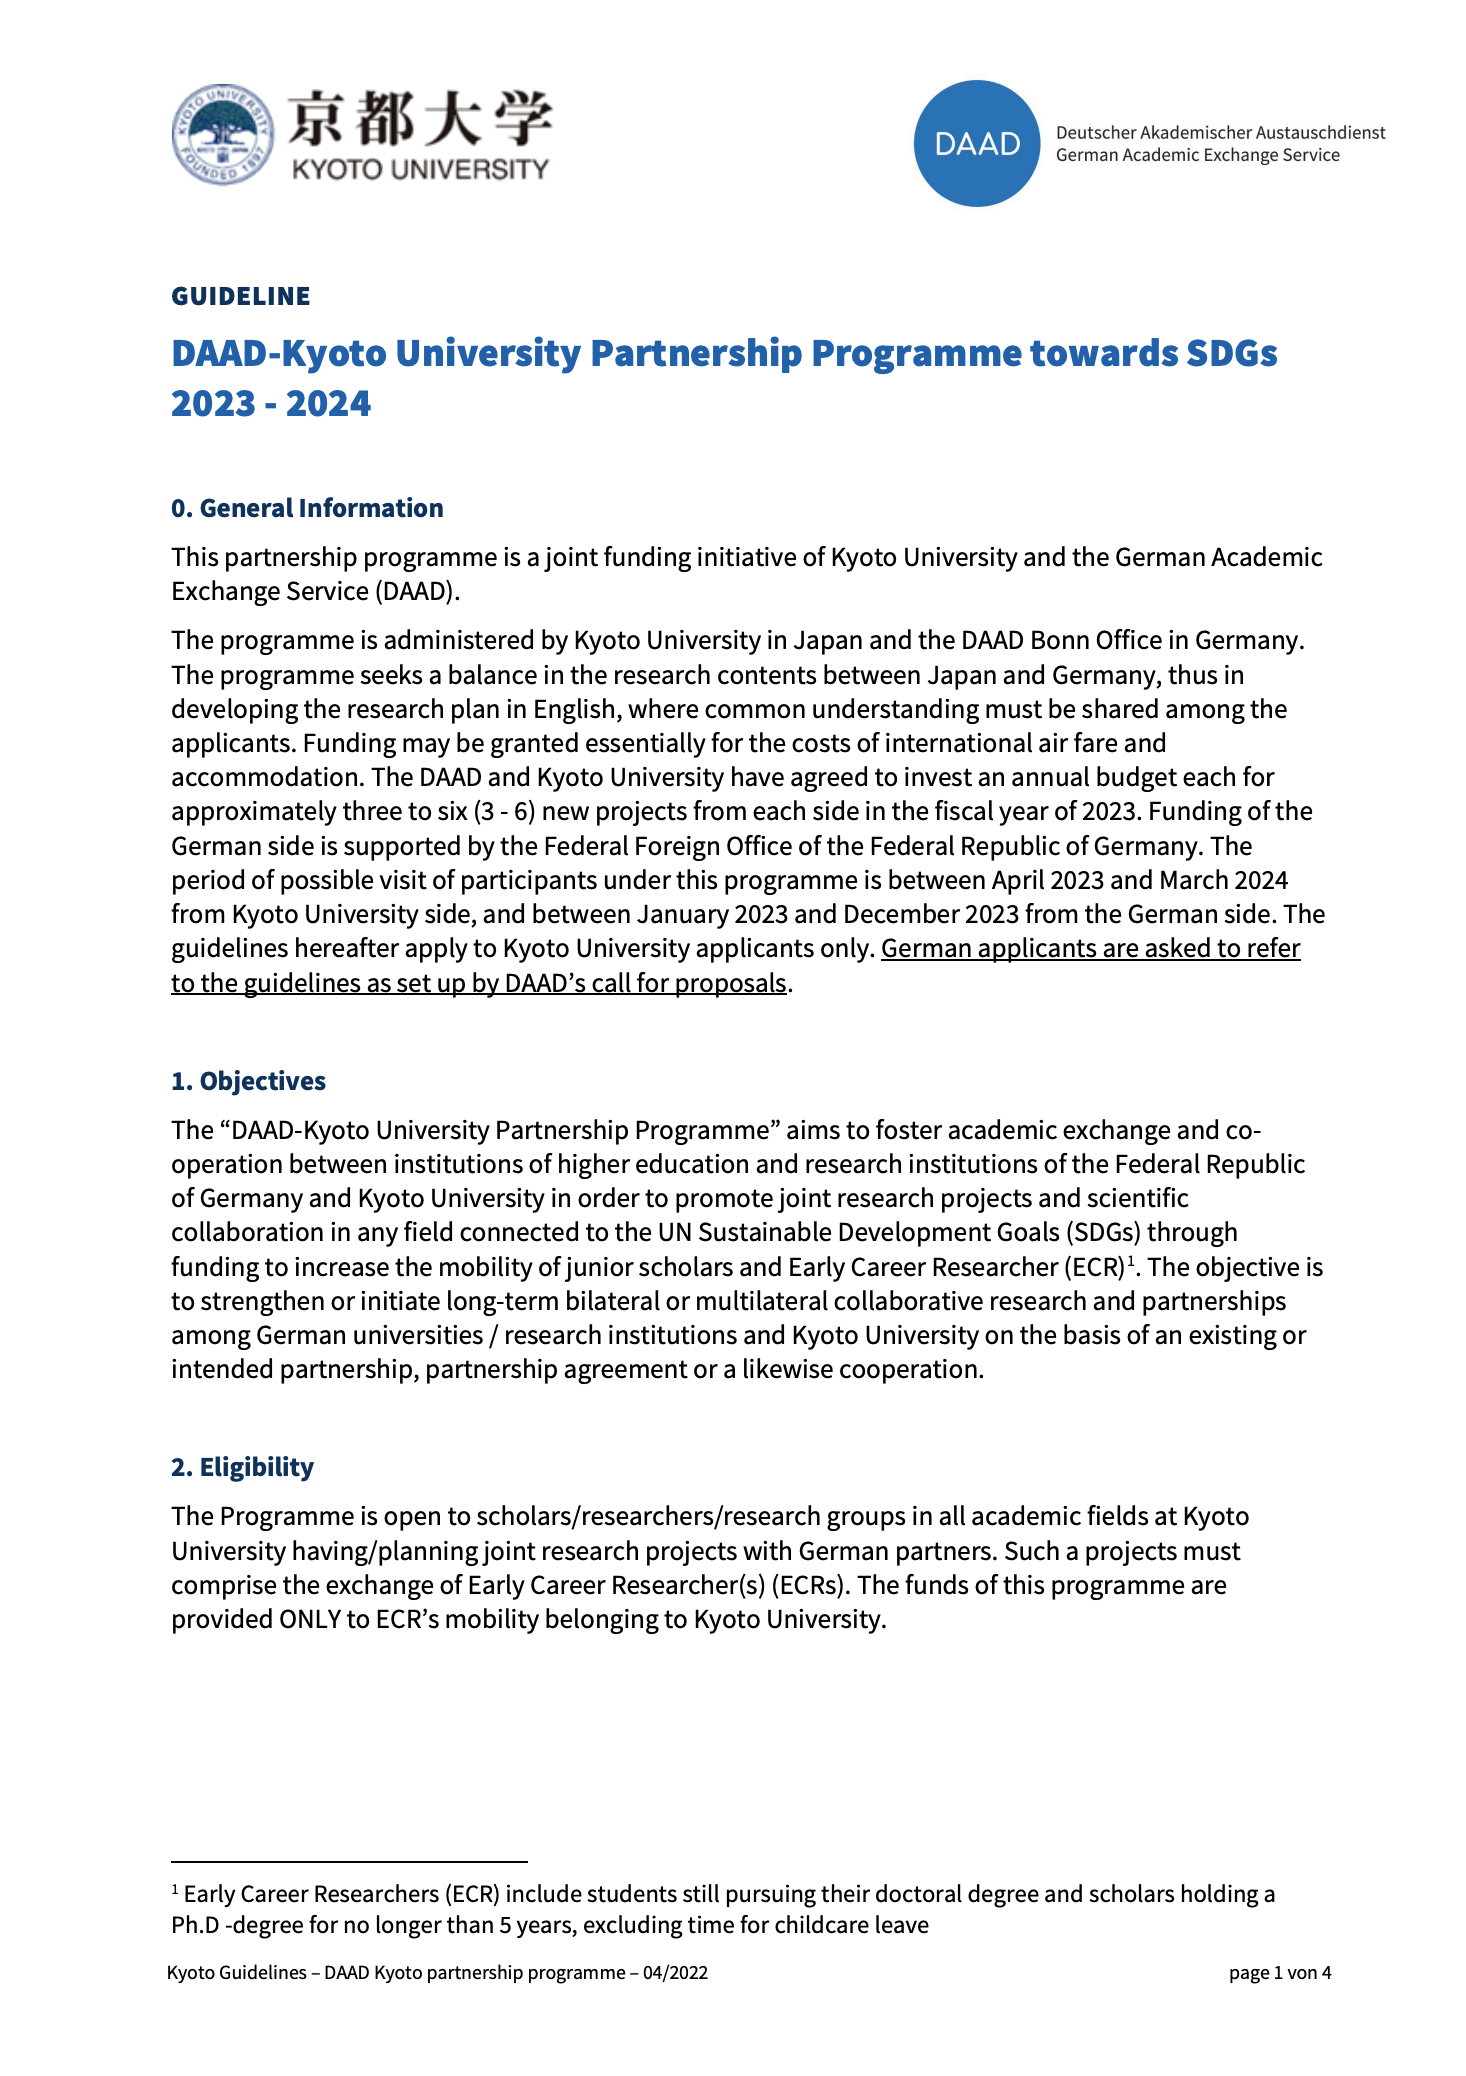 Call for Application: DAAD-Kyoto University Partnership Programme towards SDGs 2023-2024 Guideline